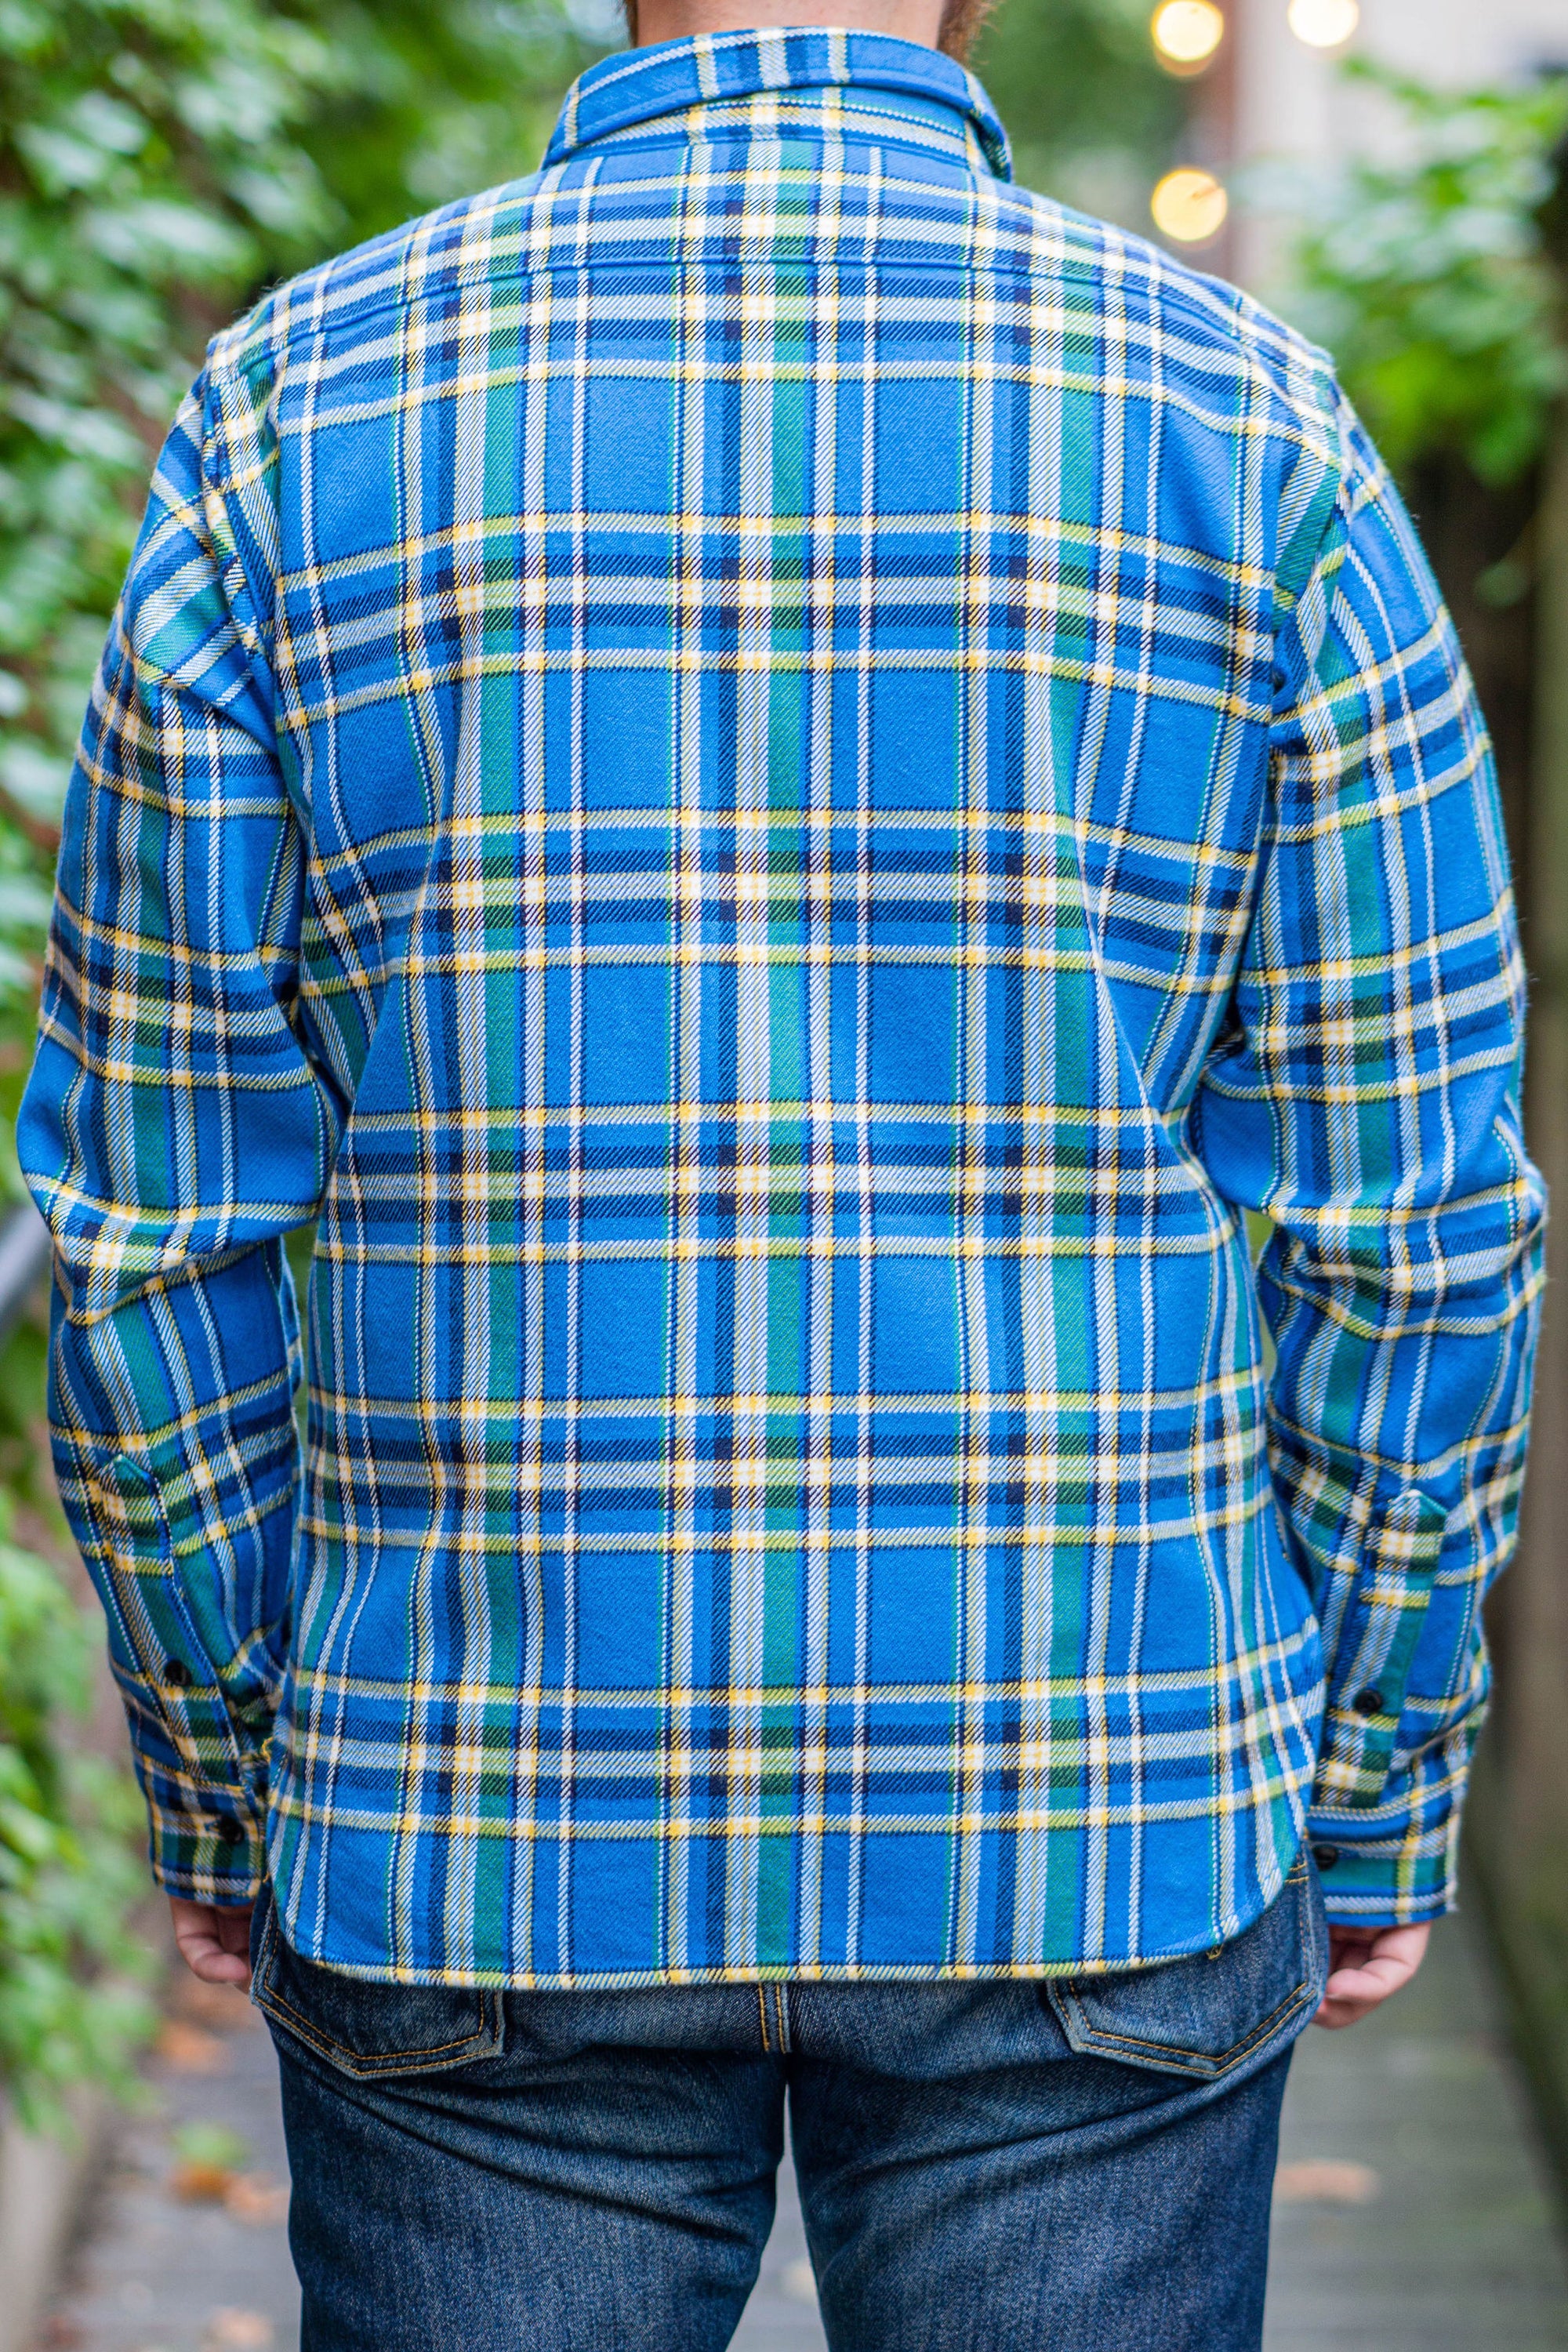 Iron Heart IHSH-376-BLU Ultra Heavy Flannel Tartan Check Work Shirt - Blue